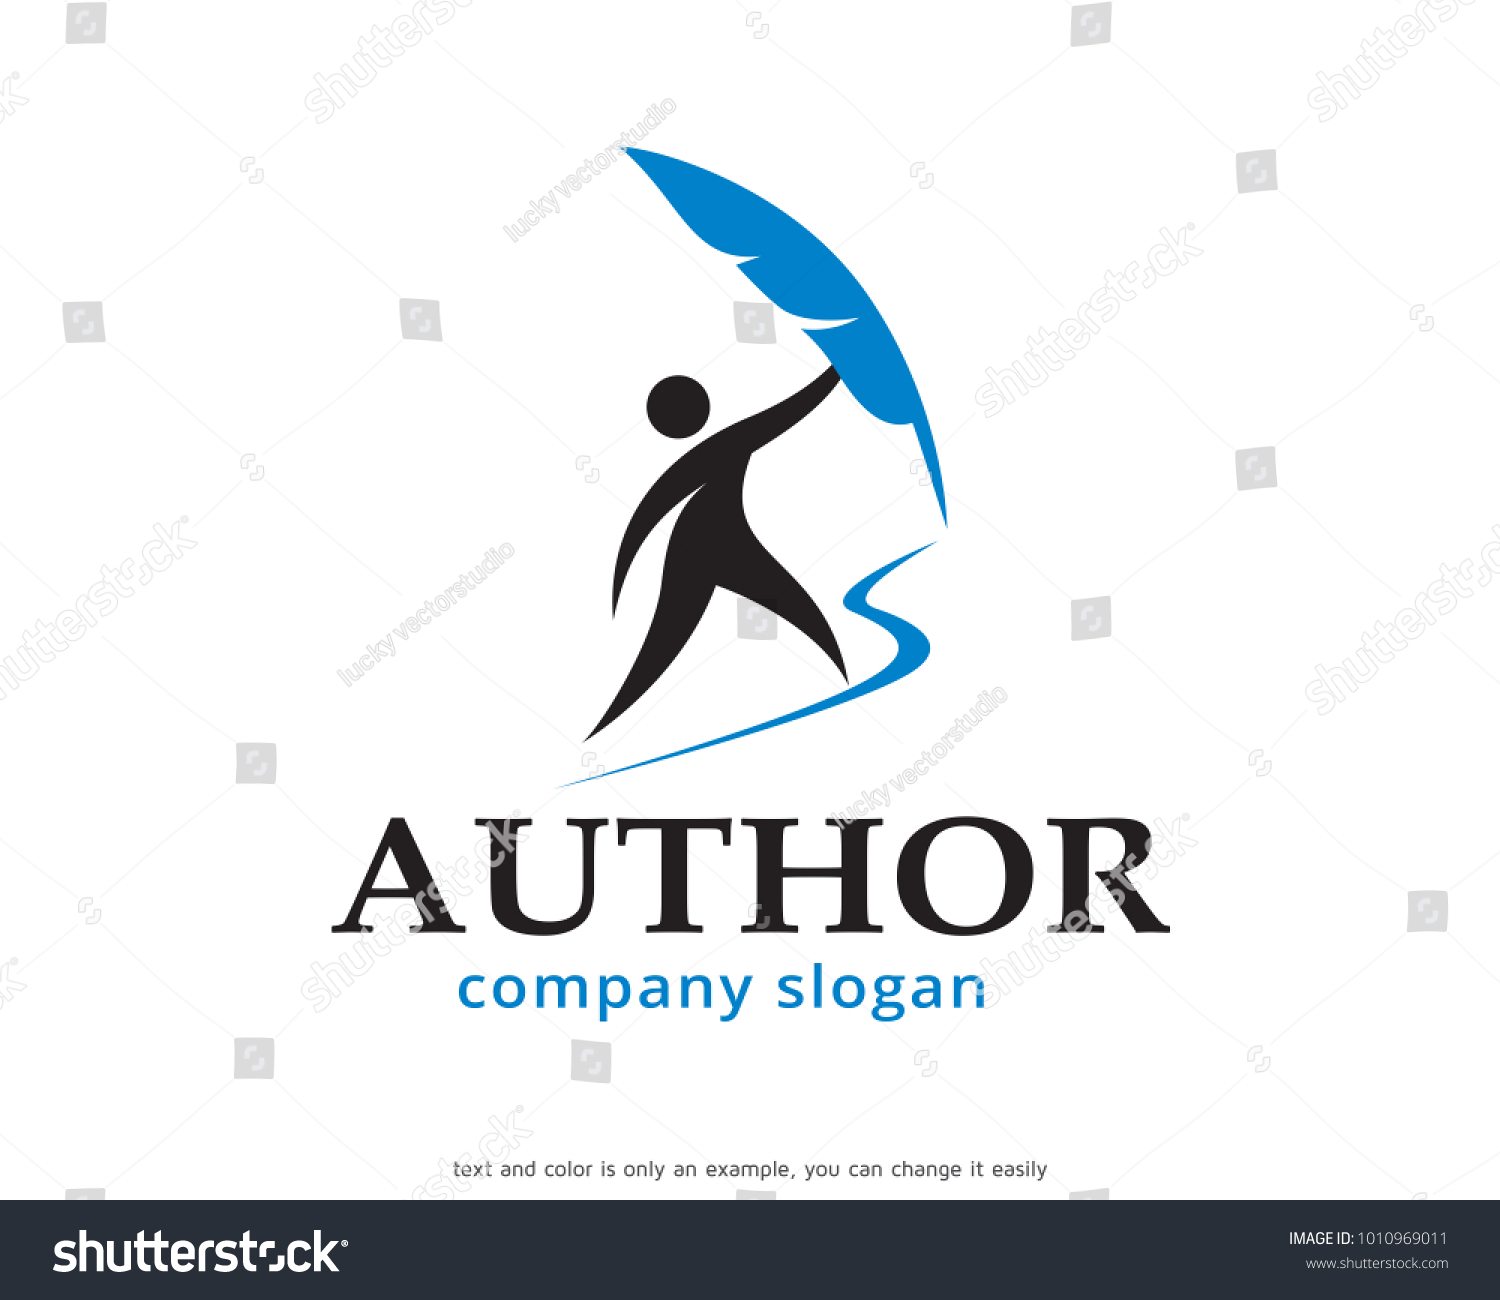 author logo design